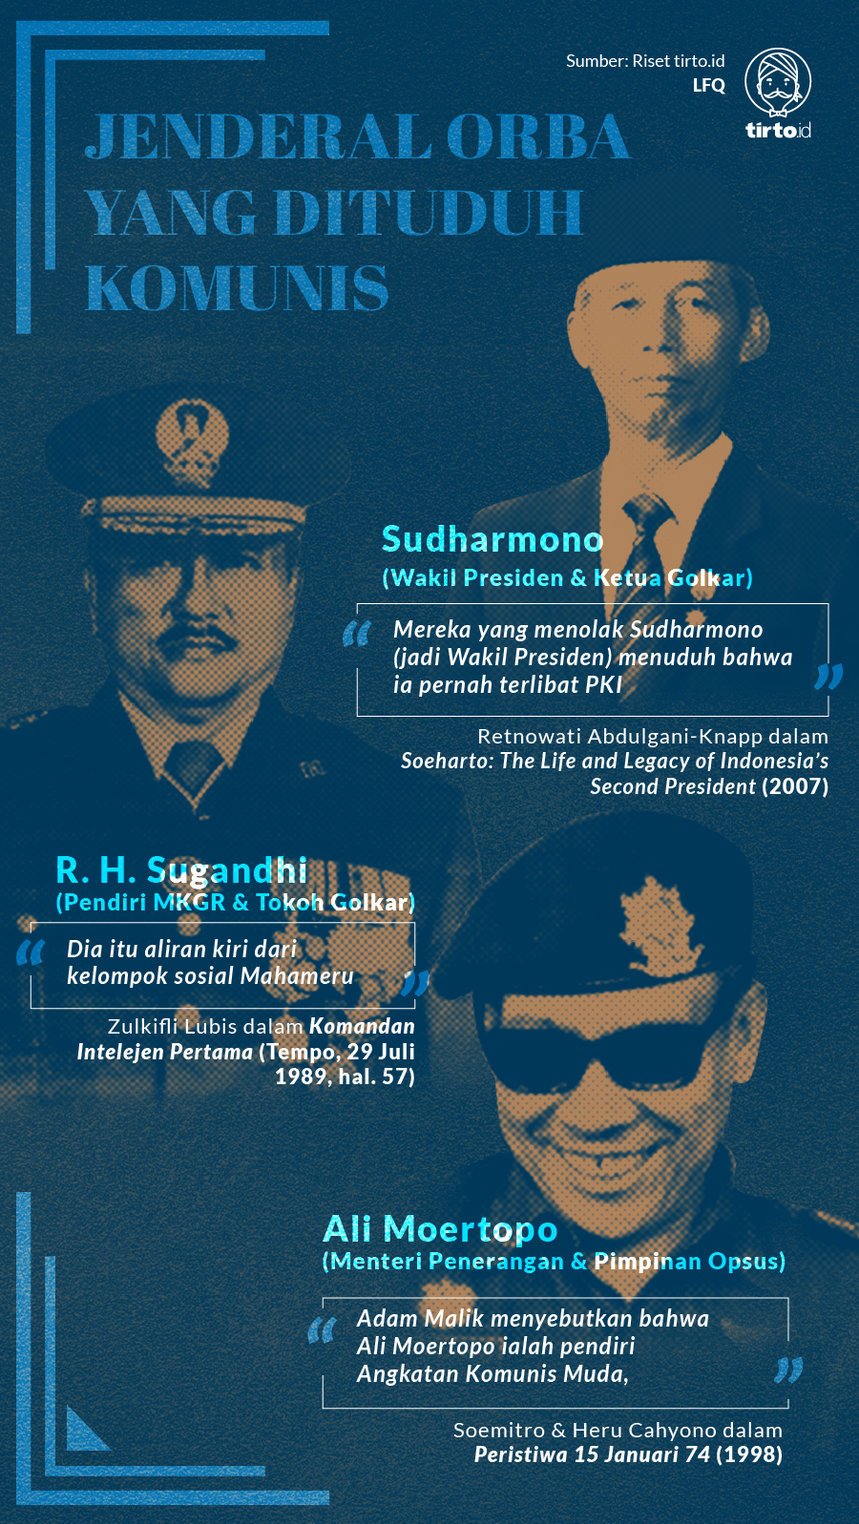 Infografik Jenderal Orba yang dituduh Komunis